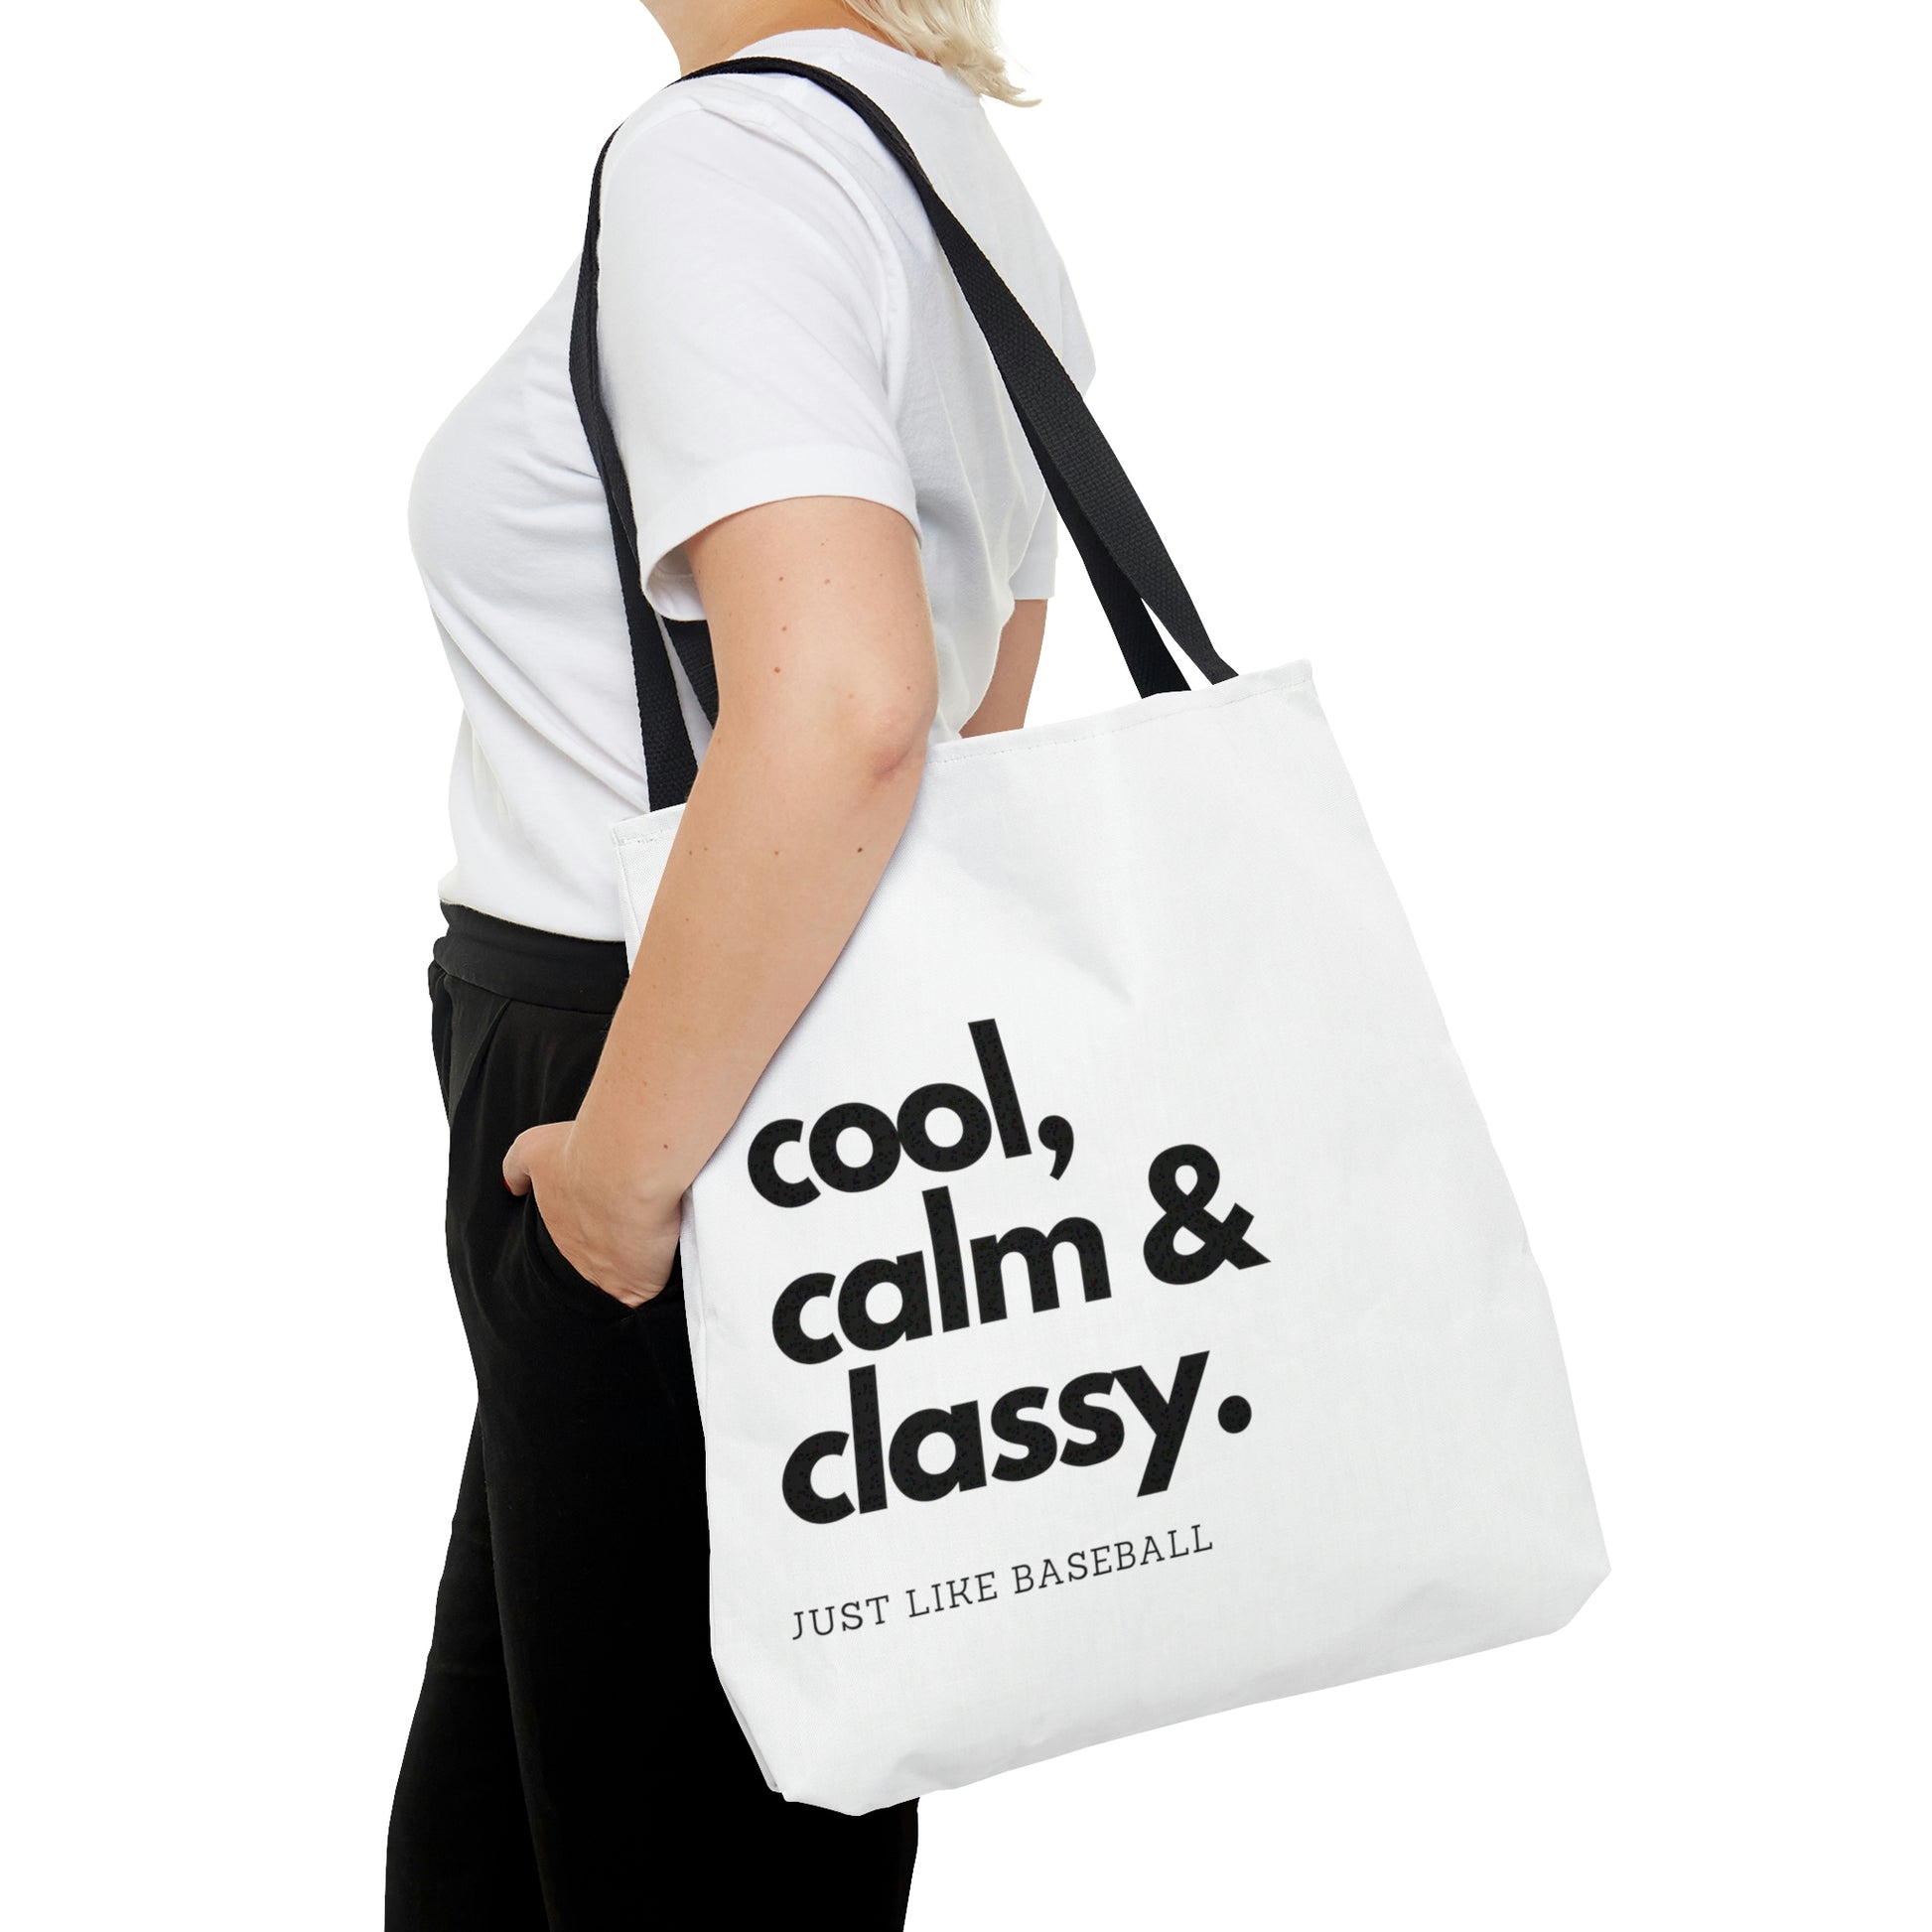 classy bag